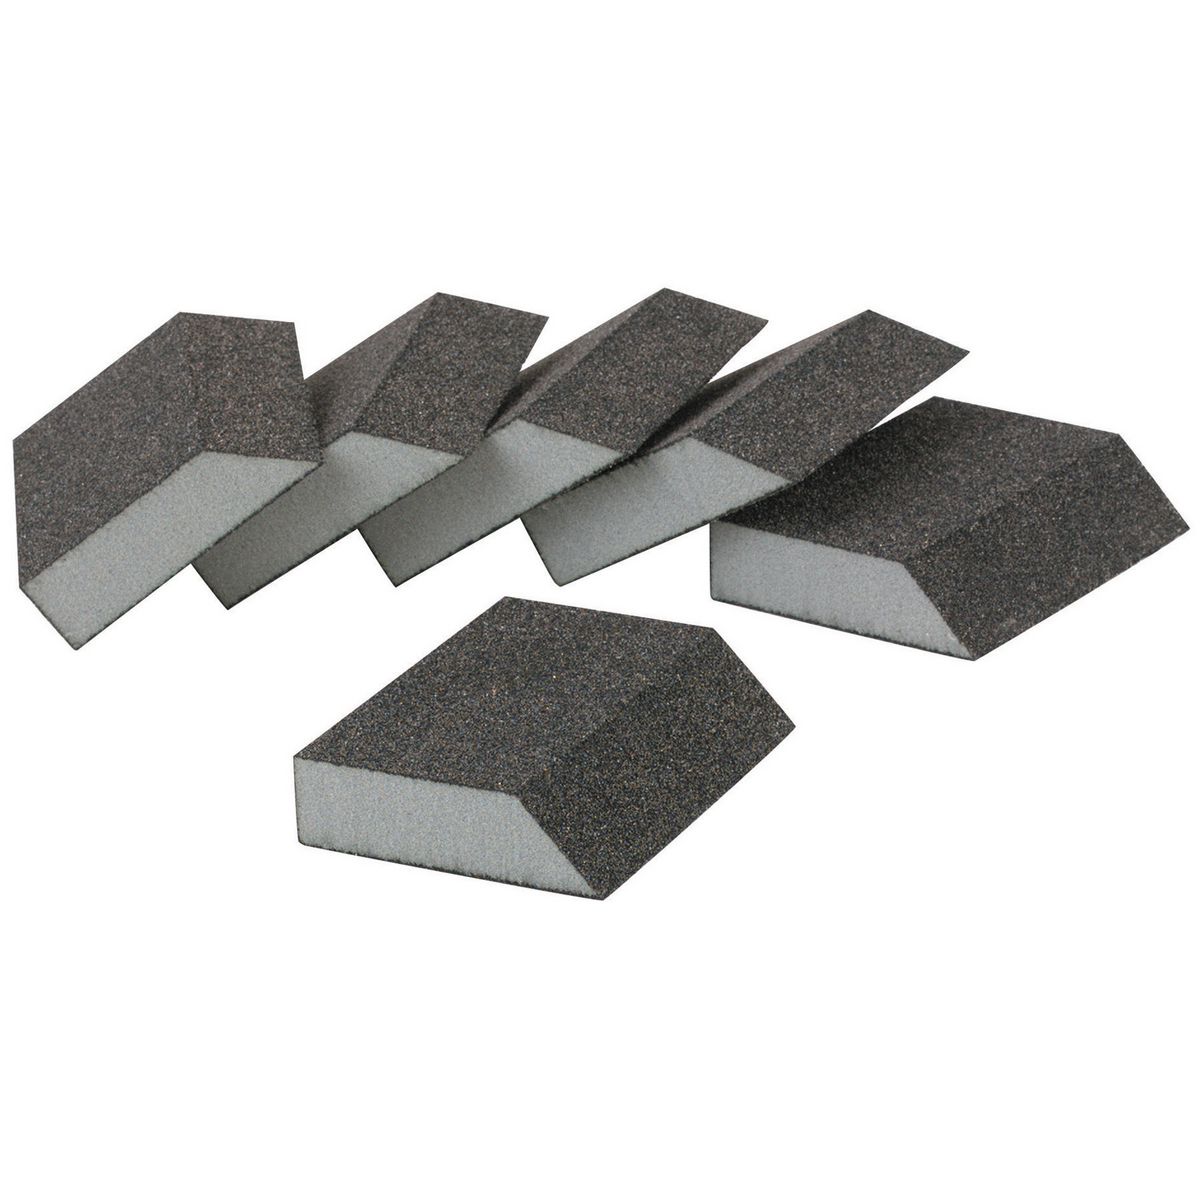 WARRIOR Aluminum Oxide Angled Sanding Sponges - Coarse Grade 6 Pk. - Item 63913 / 90311